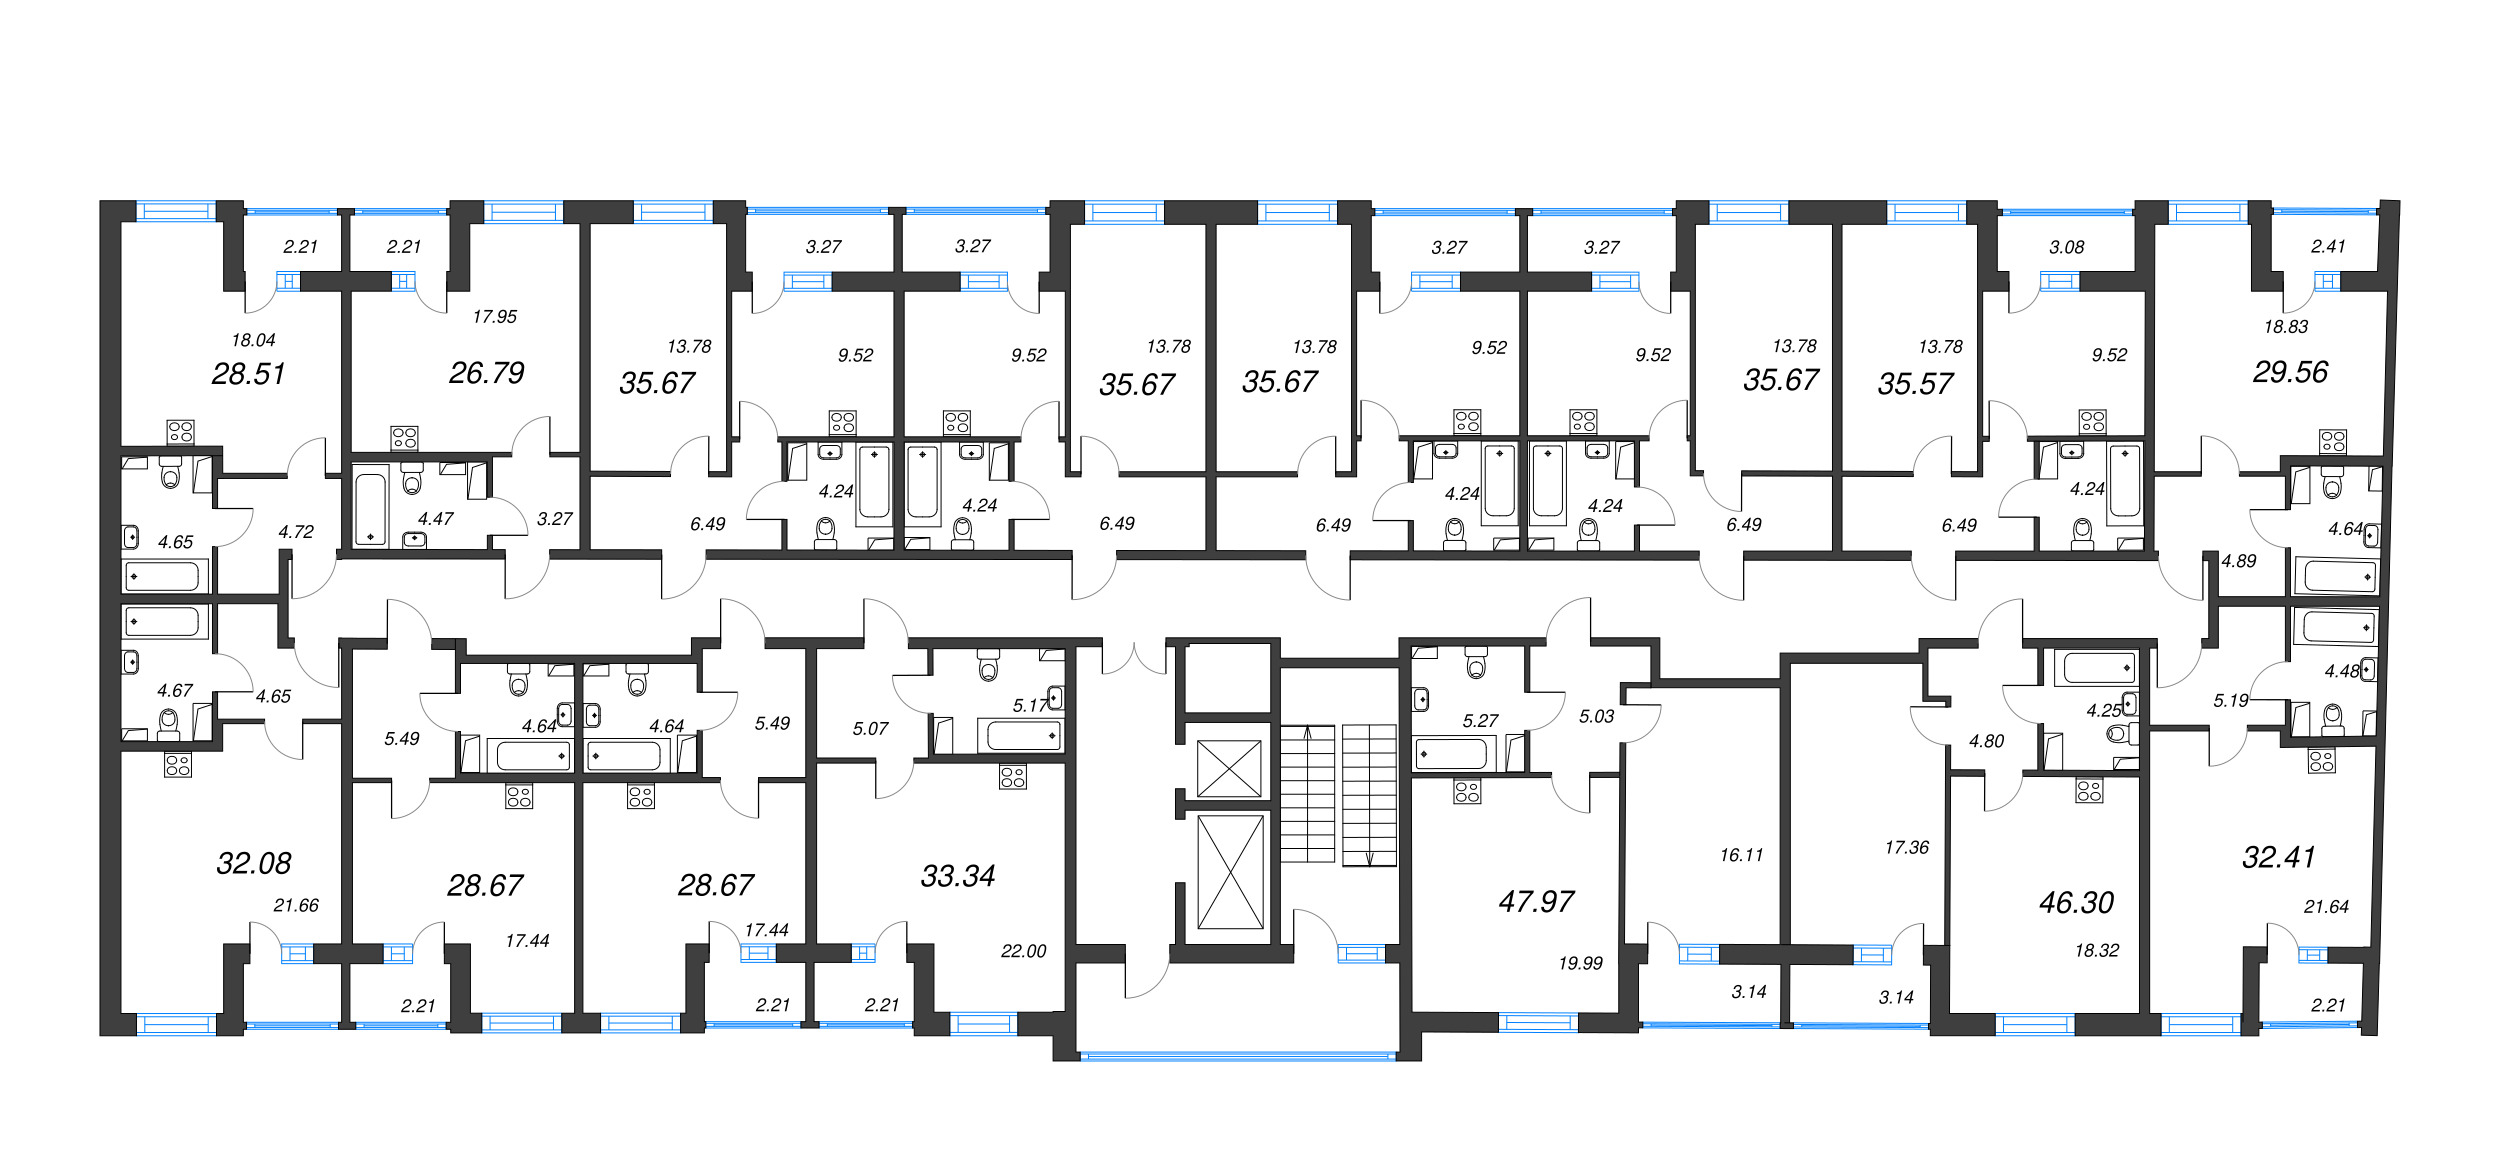 2-комнатная (Евро) квартира, 46.3 м² - планировка этажа